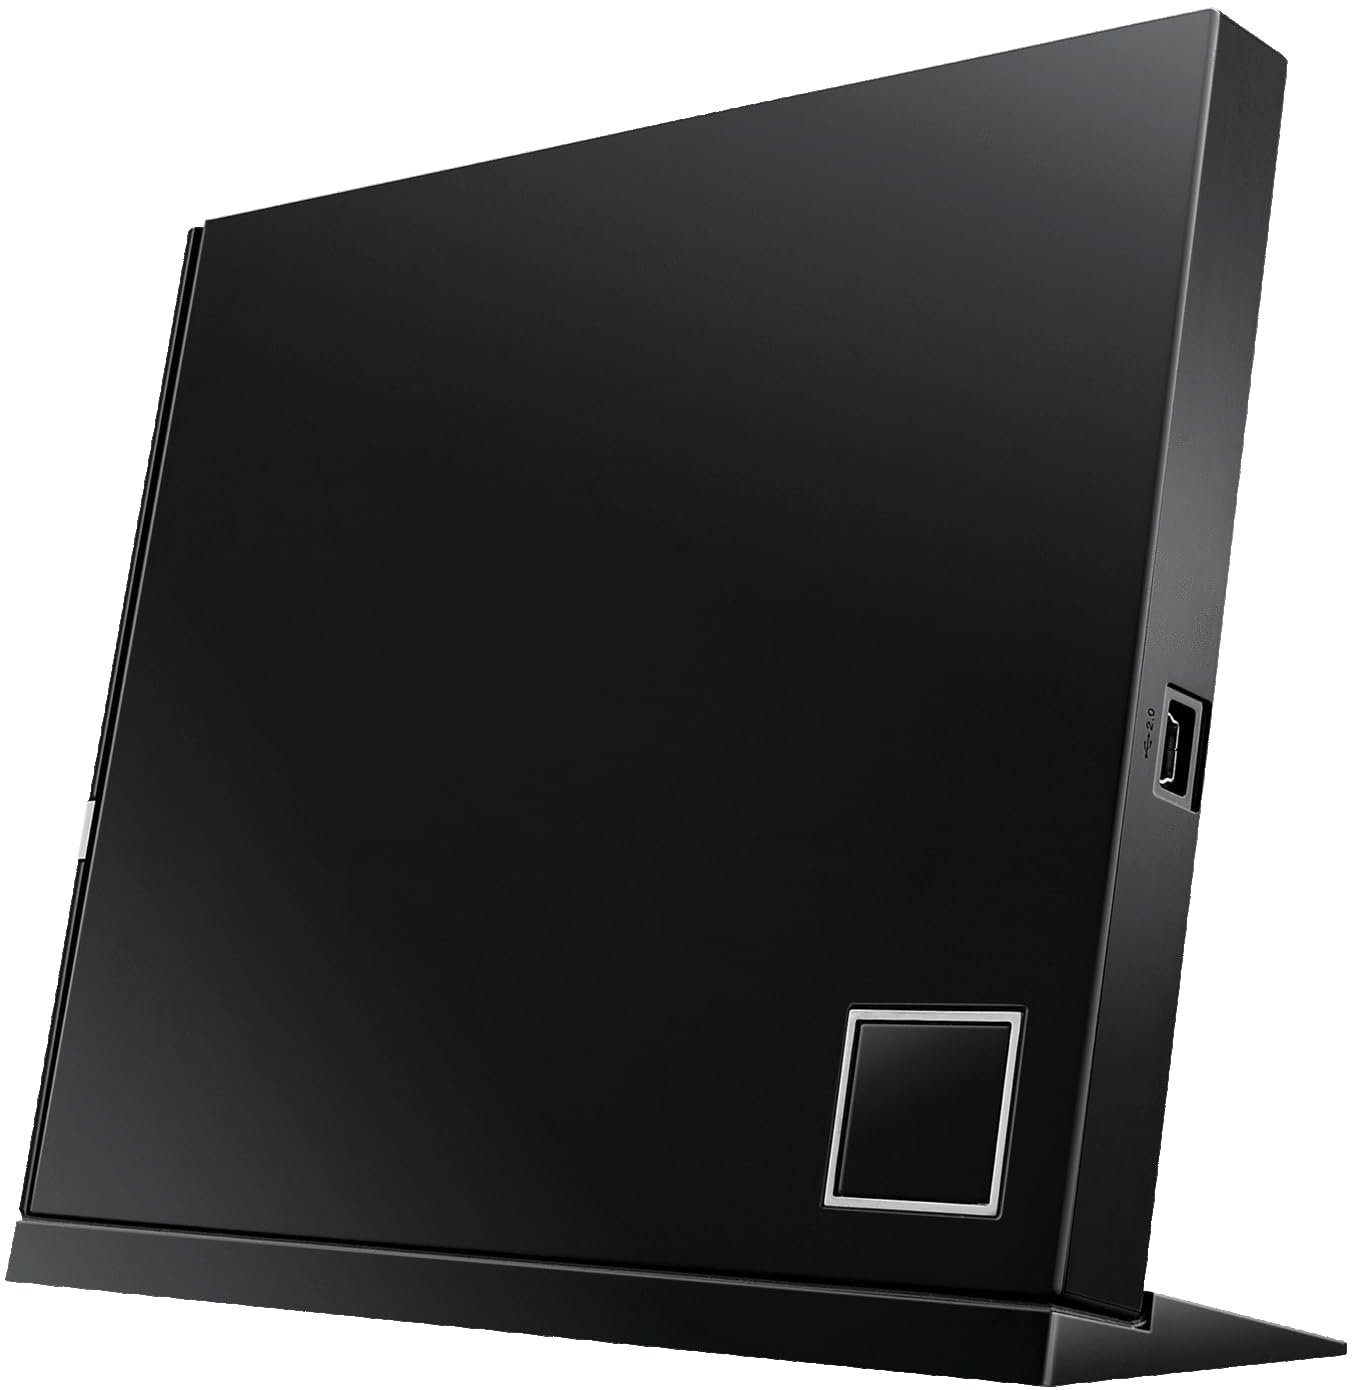 Asus SBC-06D2X-U externes Slim Blu-Ray BDXL Combo (6x BD-R Lesen, 8x DVD±R, 6x DVD±R DL, 5x DVD-RAM, USB 2.0) inkl. Cyberlink Power2Go, Hochglanz Schwarz